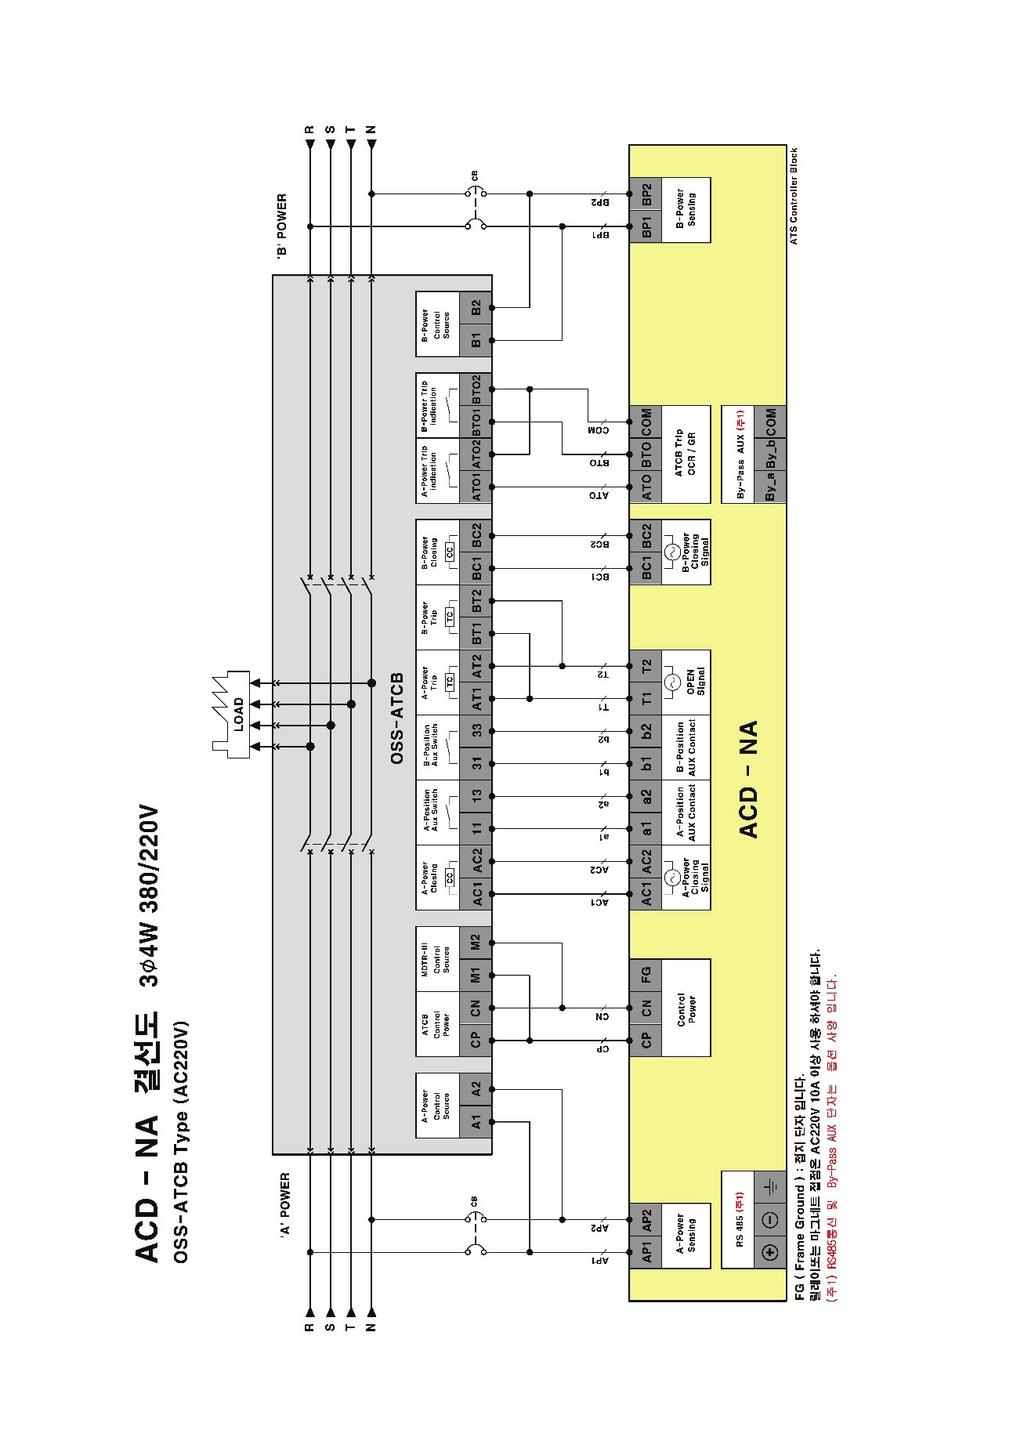 8. Wiring diagram 7.1 For ATCB FG is grounding terminal.